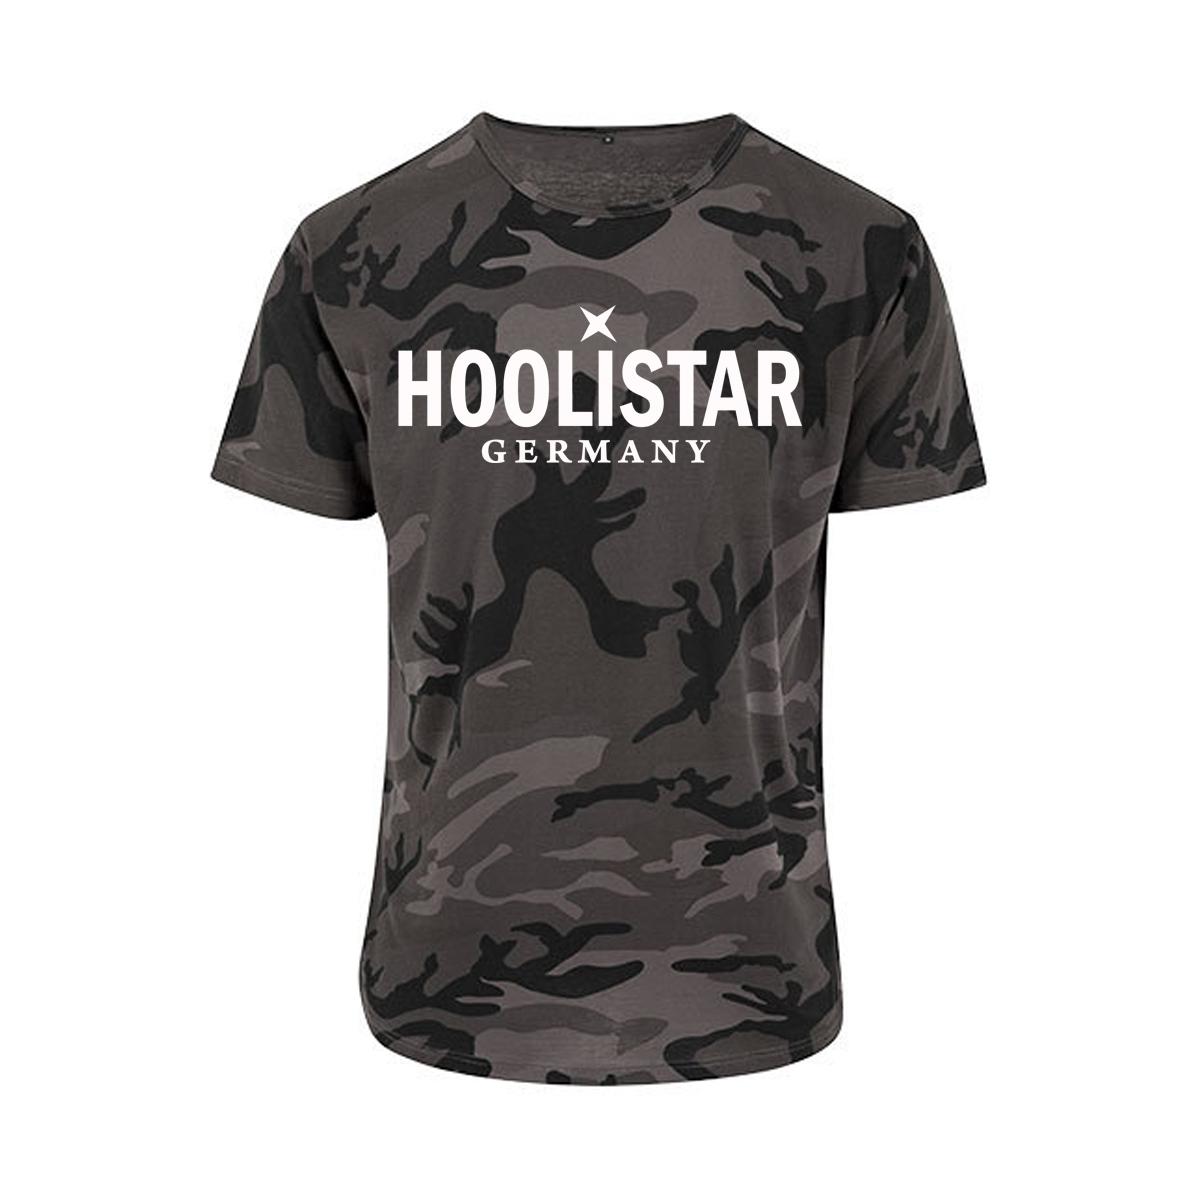 X Hoolistar - Männer T-Shirt - darkcamo